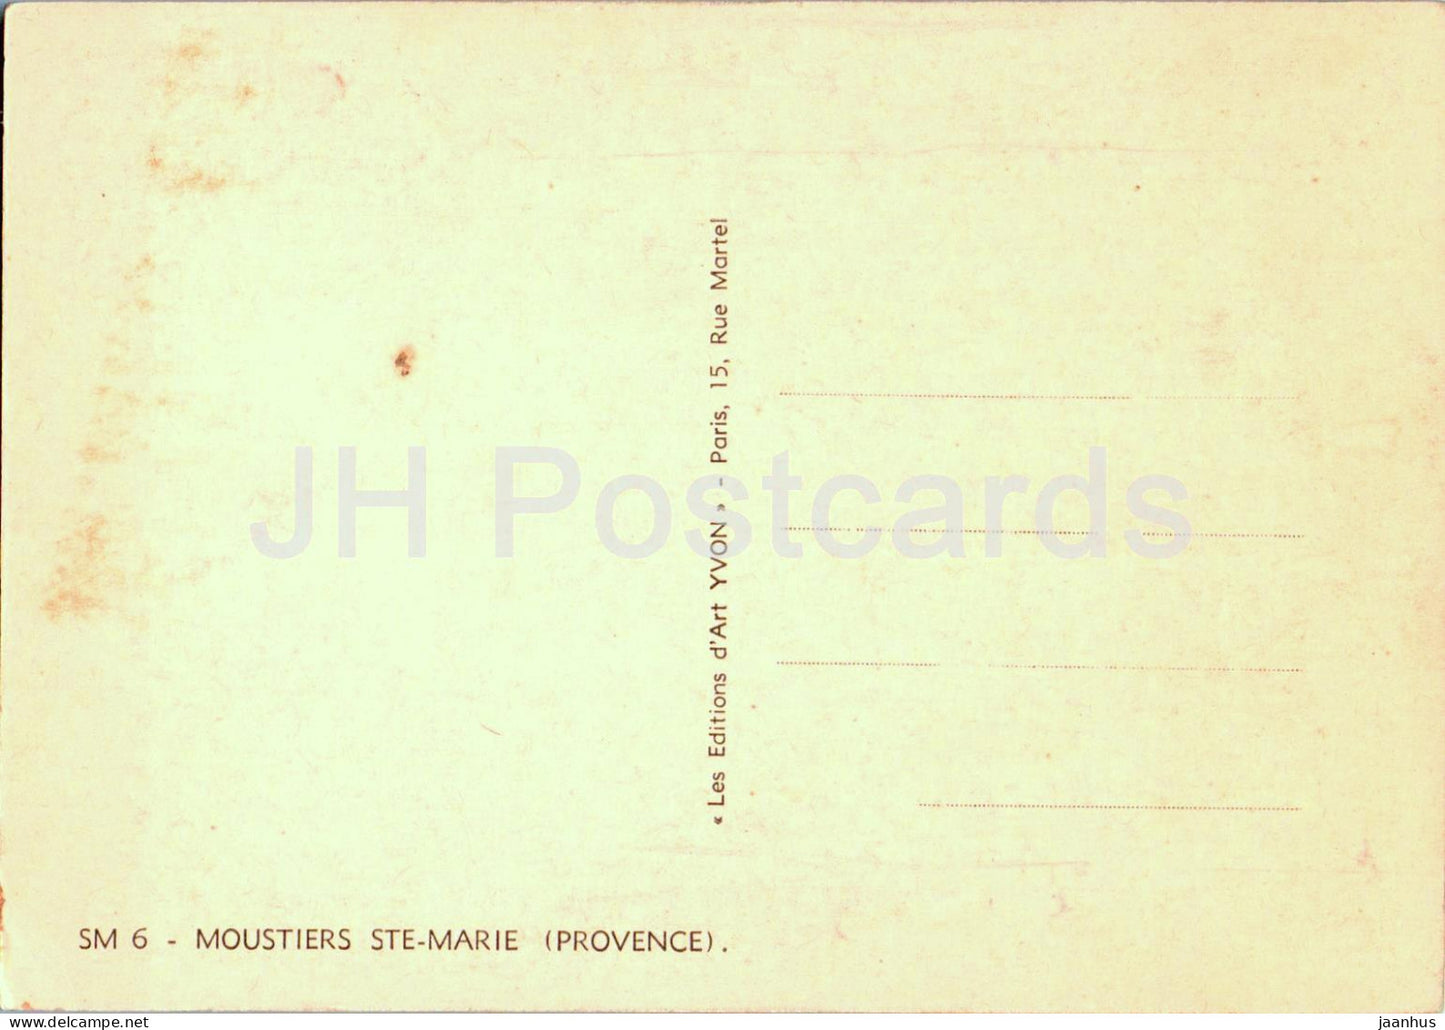 Moustiers Ste Marie - Provence - SM 6 - alte Postkarte - Frankreich - unbenutzt 